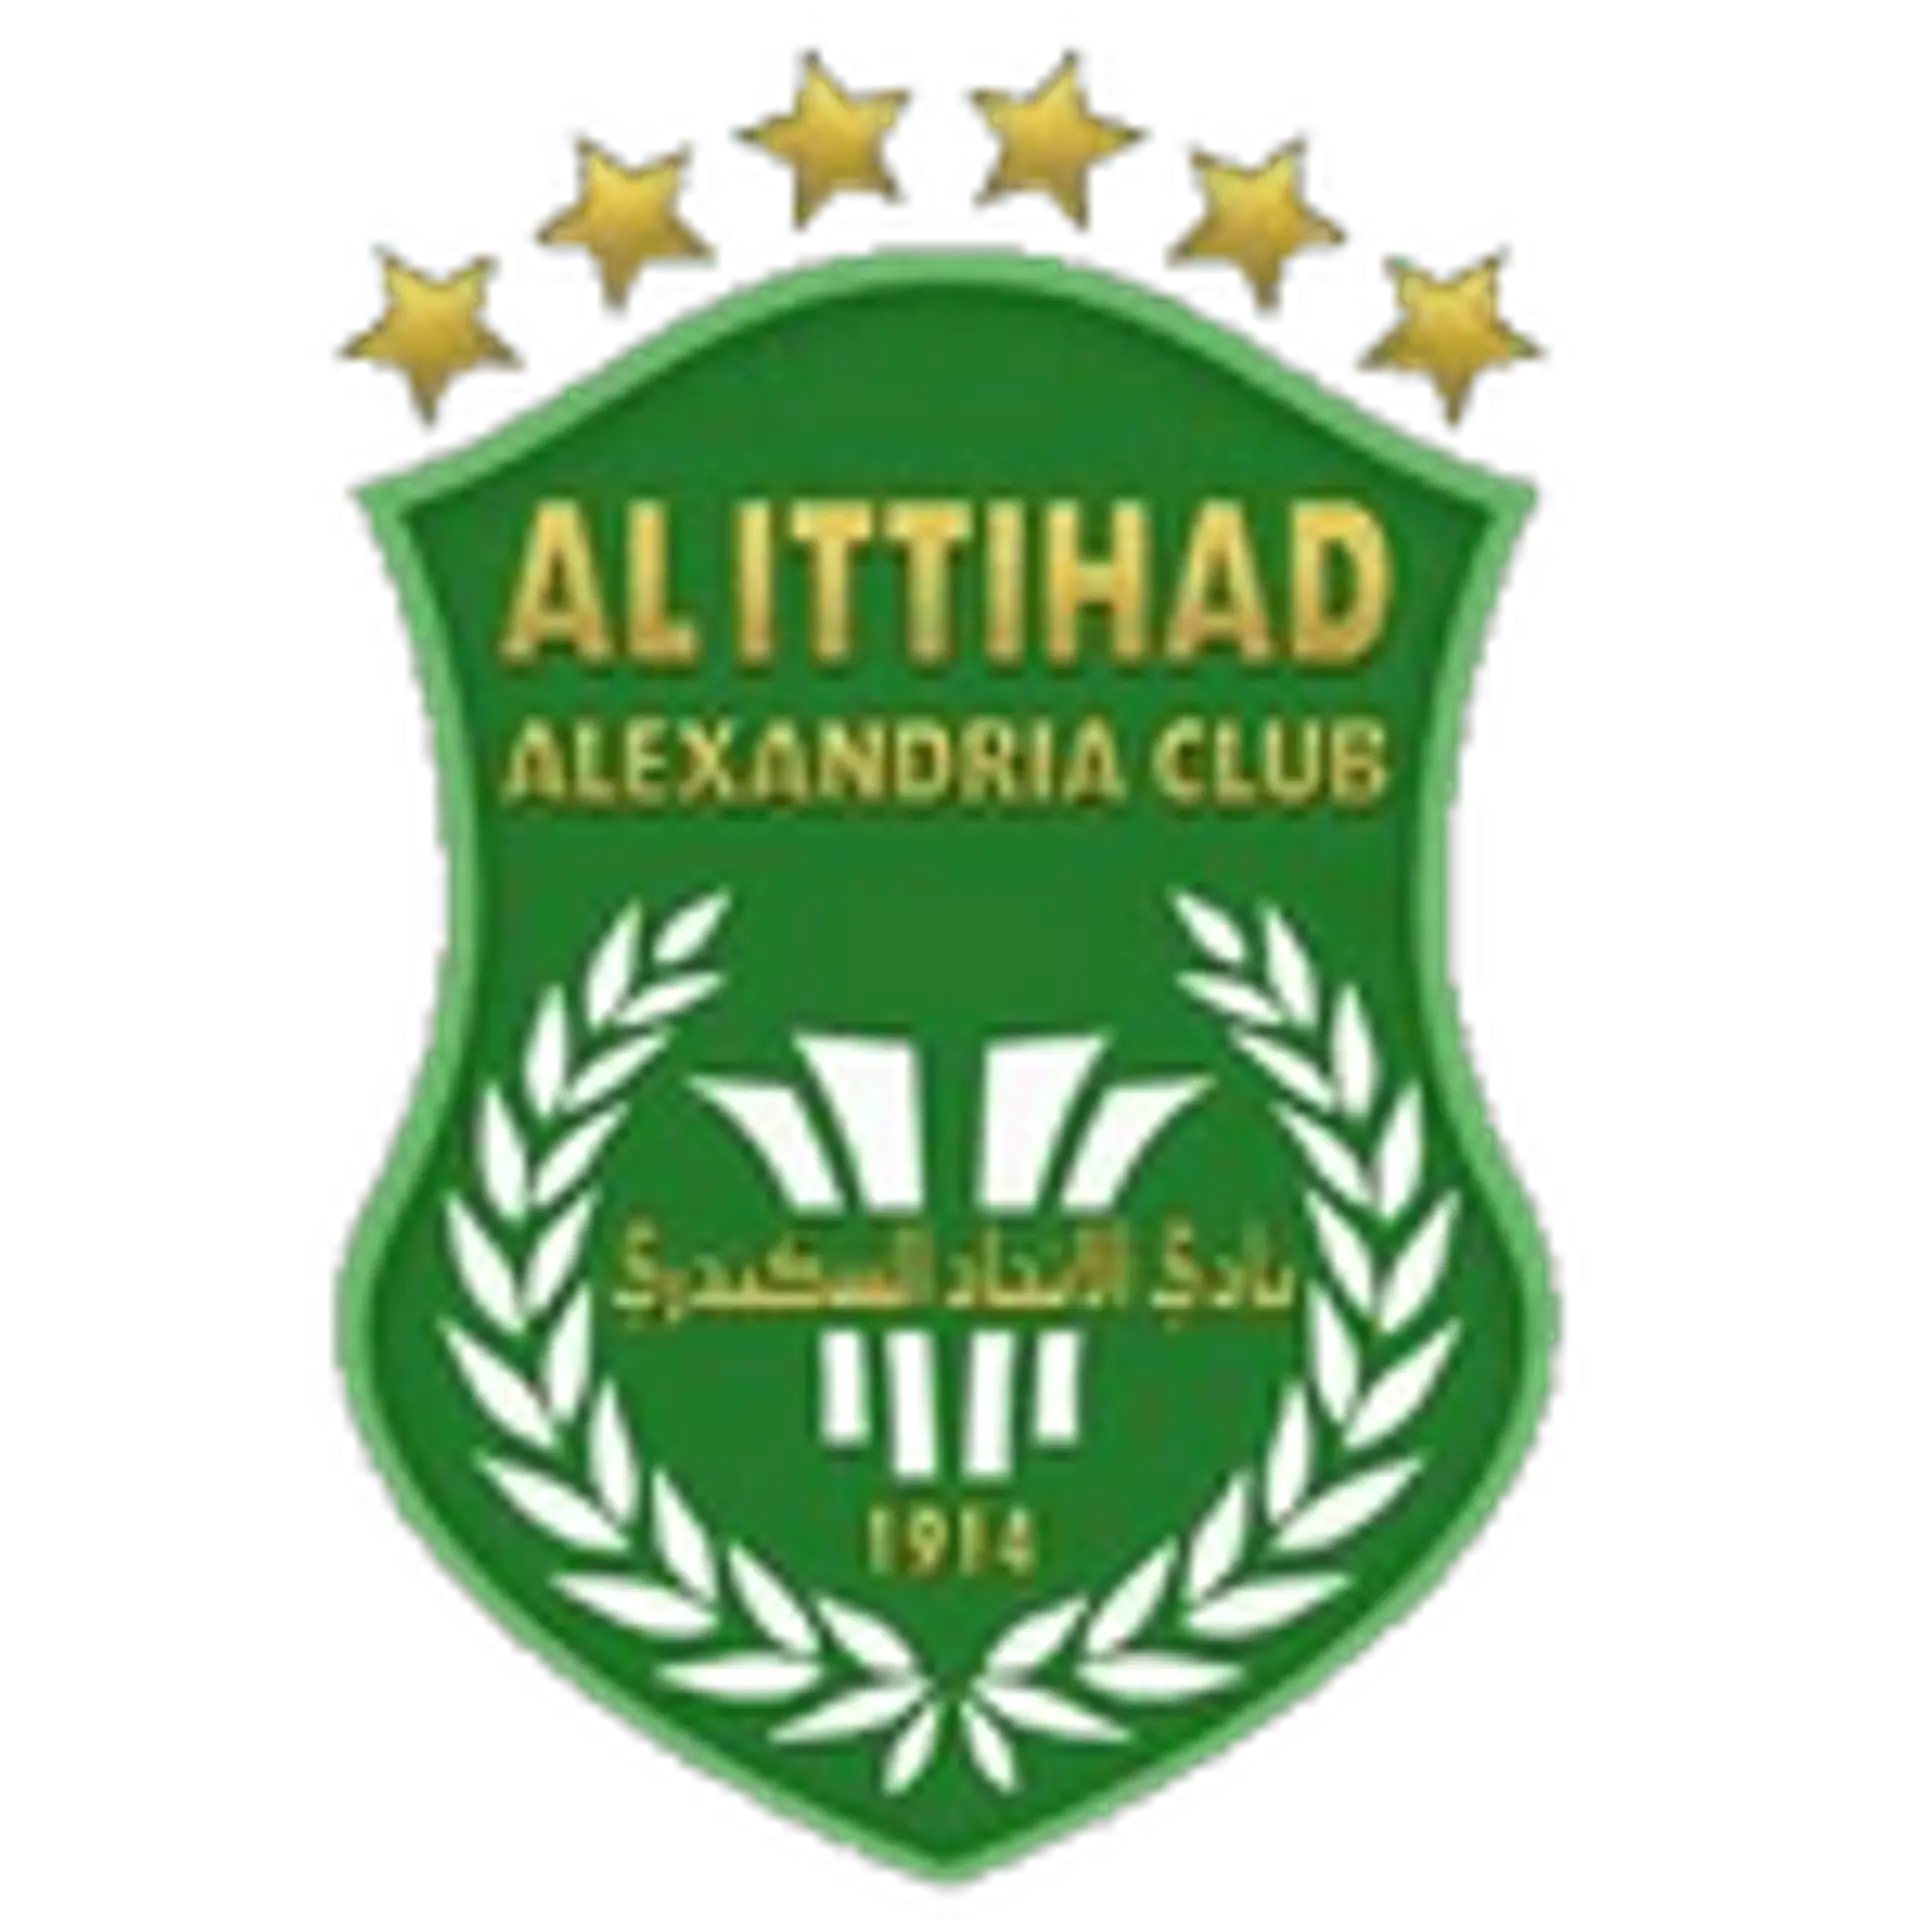 Al Ittihad Alexandria